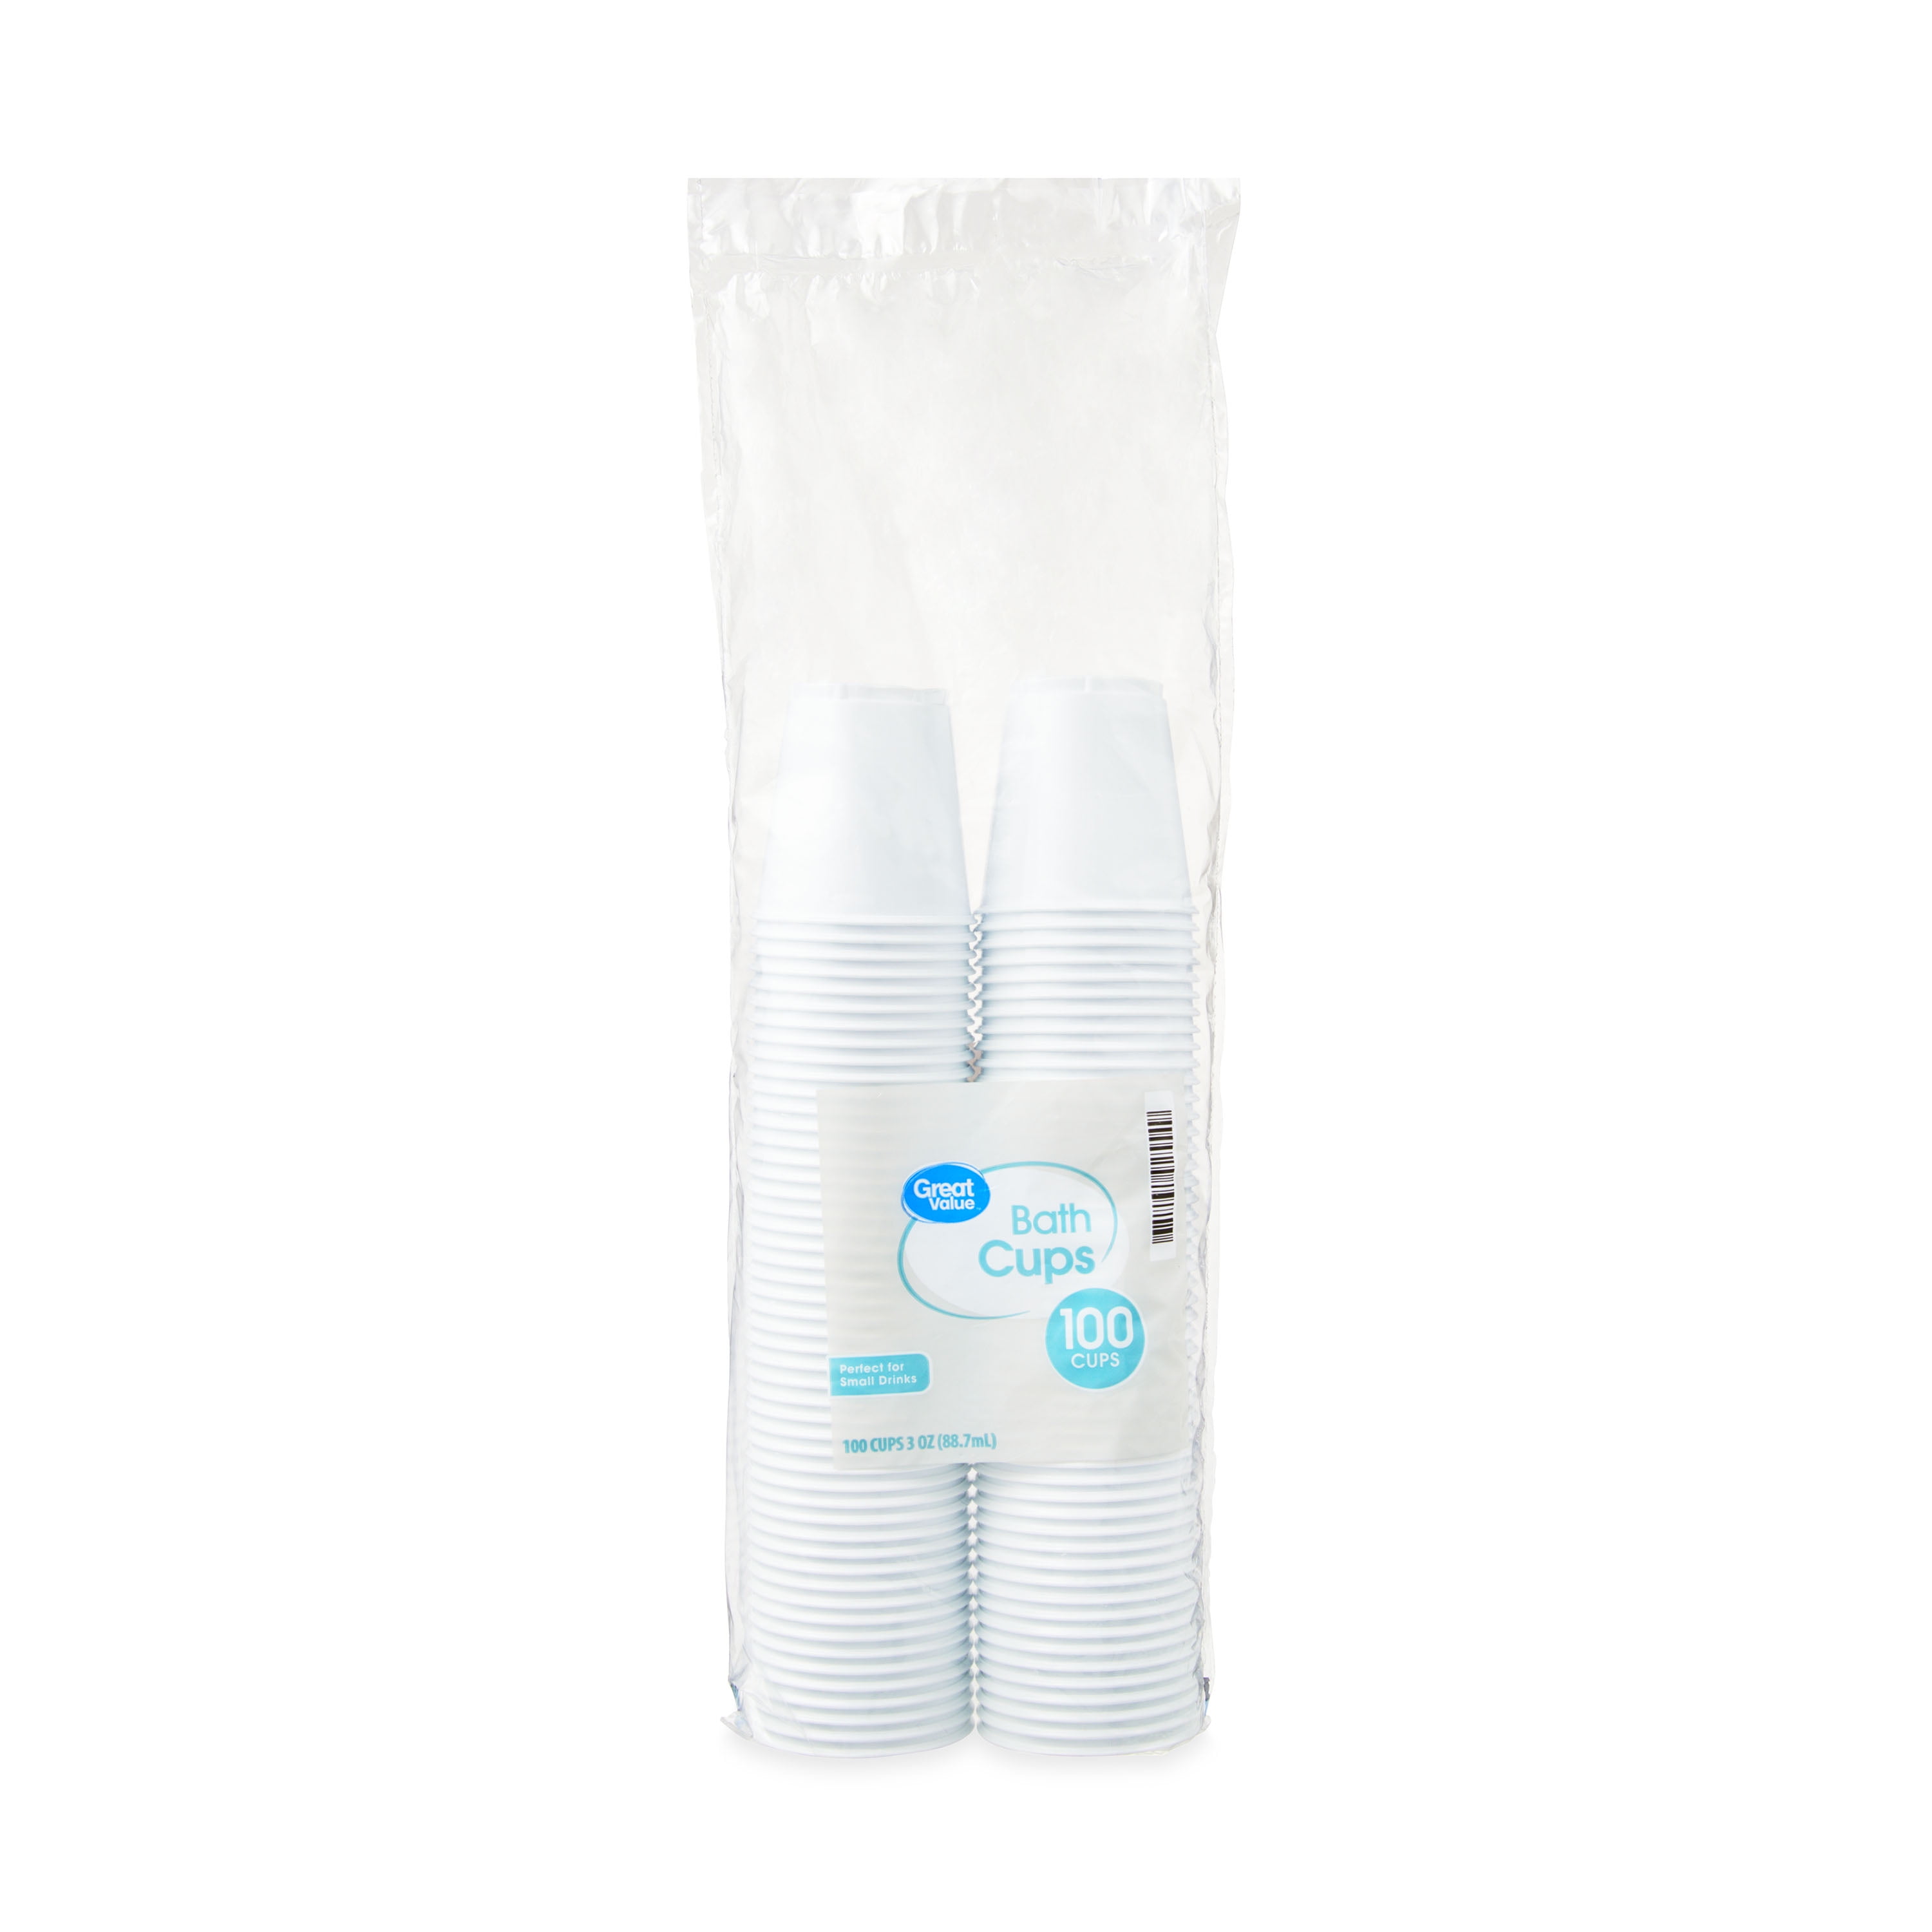 6oz White Plastic Cups (185ml), 1000/ctn